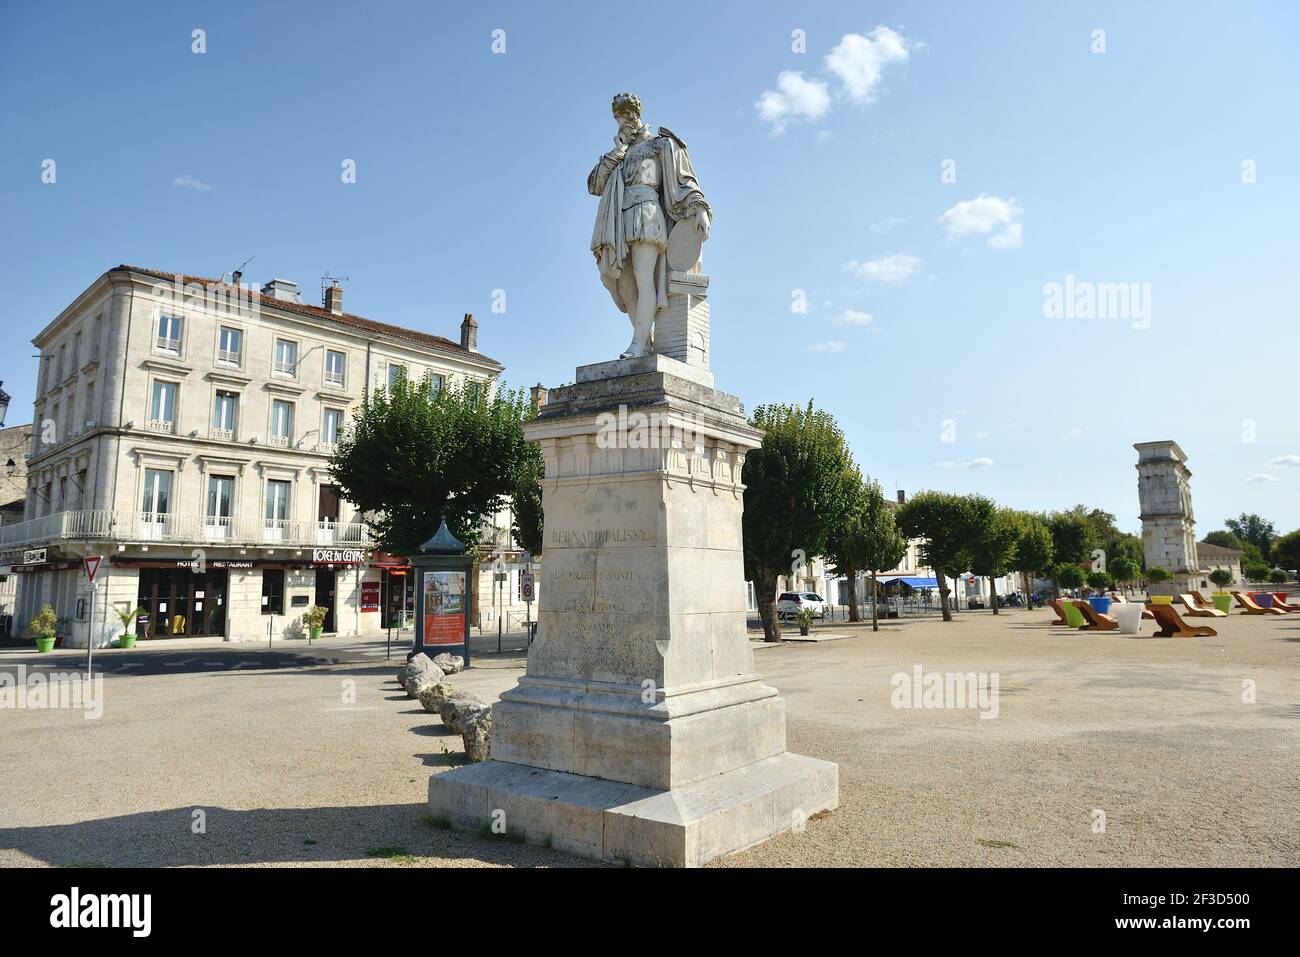 Saintes (Francia centro-occidentale): Statua di Bernard Palissy in piazza Esplanade Andre Malraux. Bernard Palissy era un vasaio di Huguenot francese, idraul Foto Stock